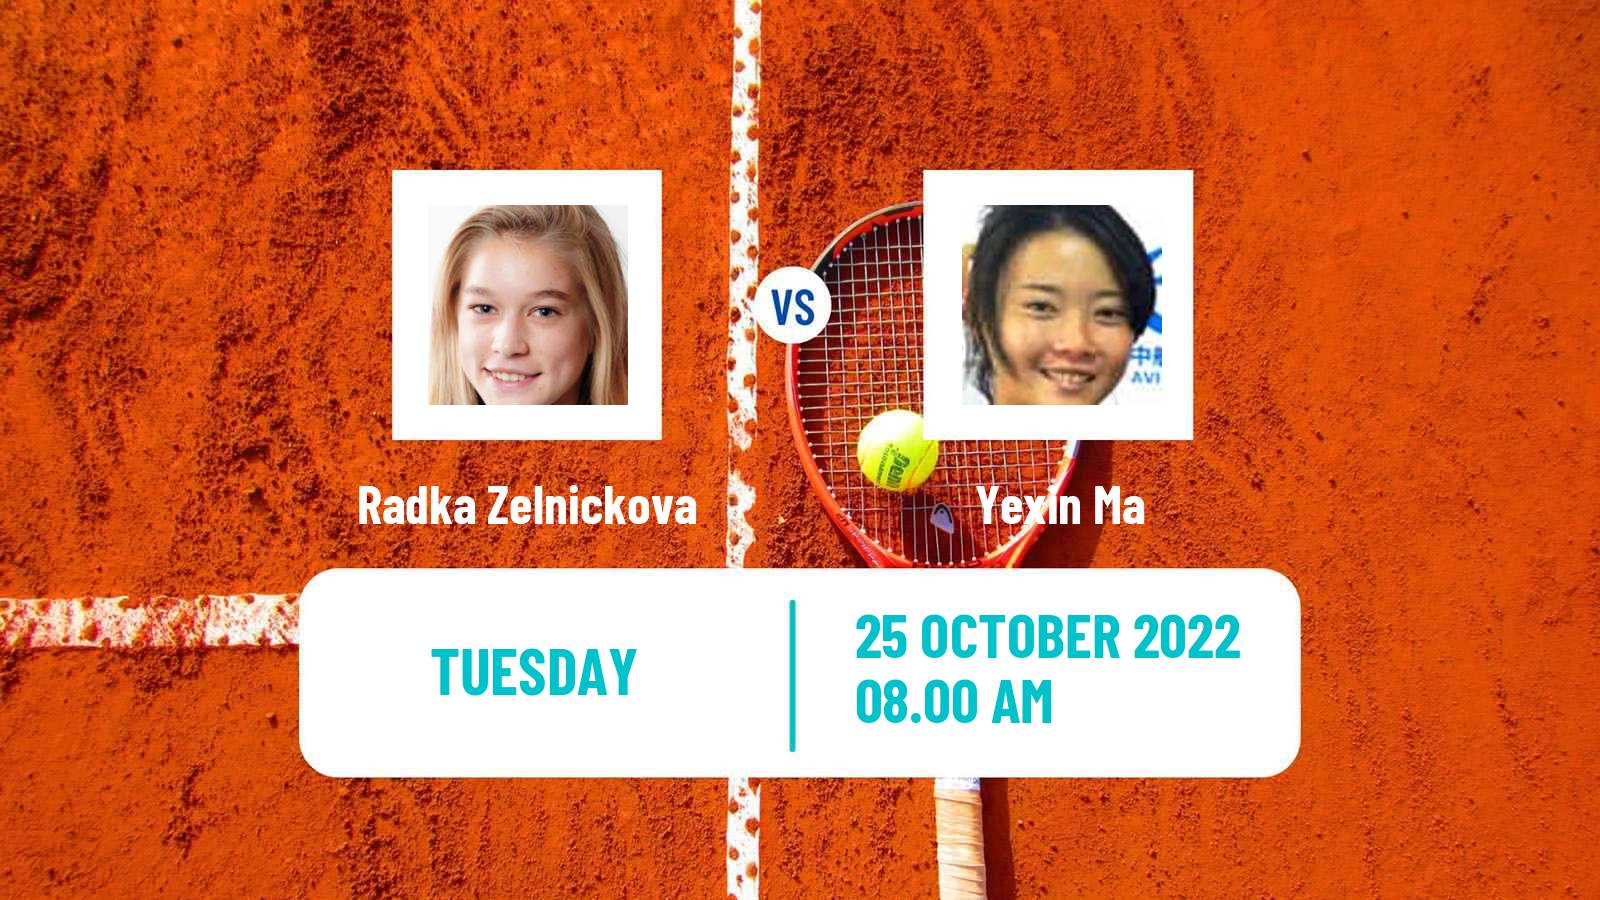 Tennis ITF Tournaments Radka Zelnickova - Yexin Ma